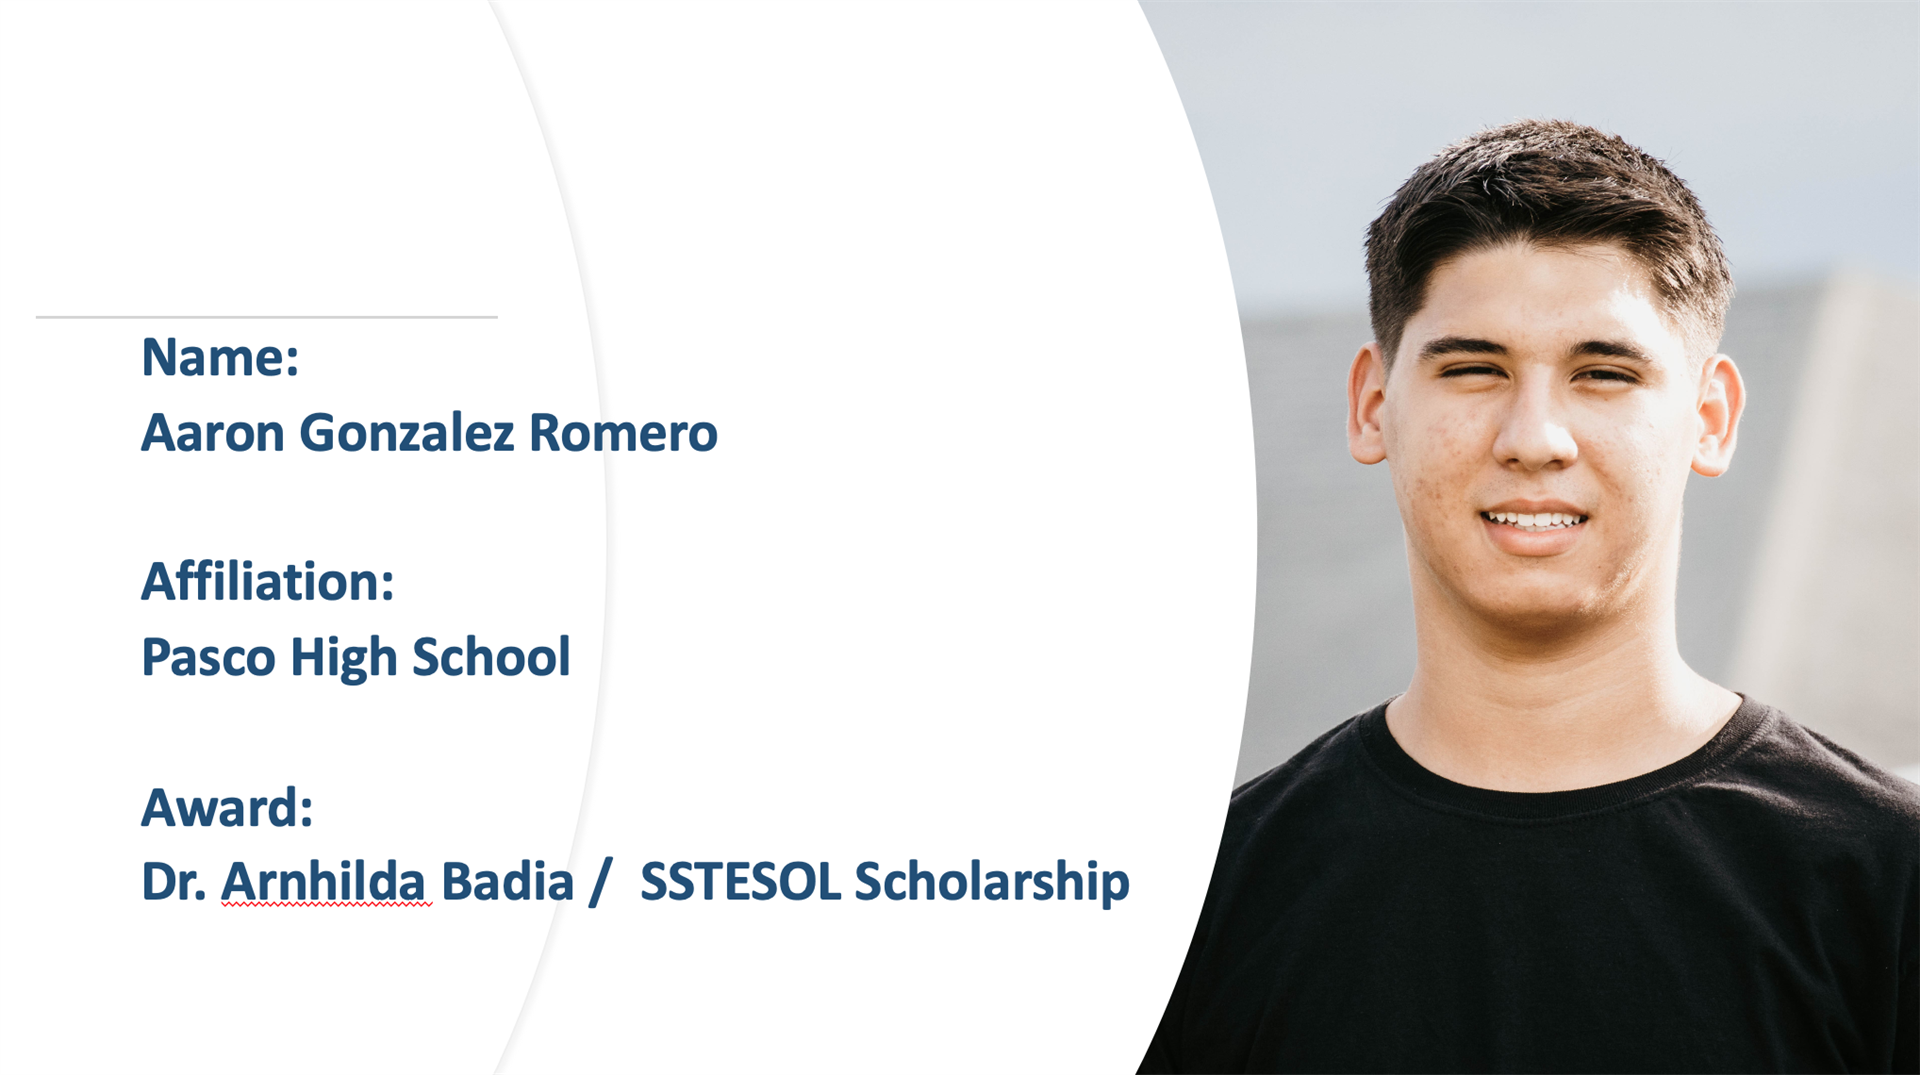 Aaron Gonzalez Romero of Pasco High School. Award the Dr. Arnhilda Badia/SSTESOL Scholarship.